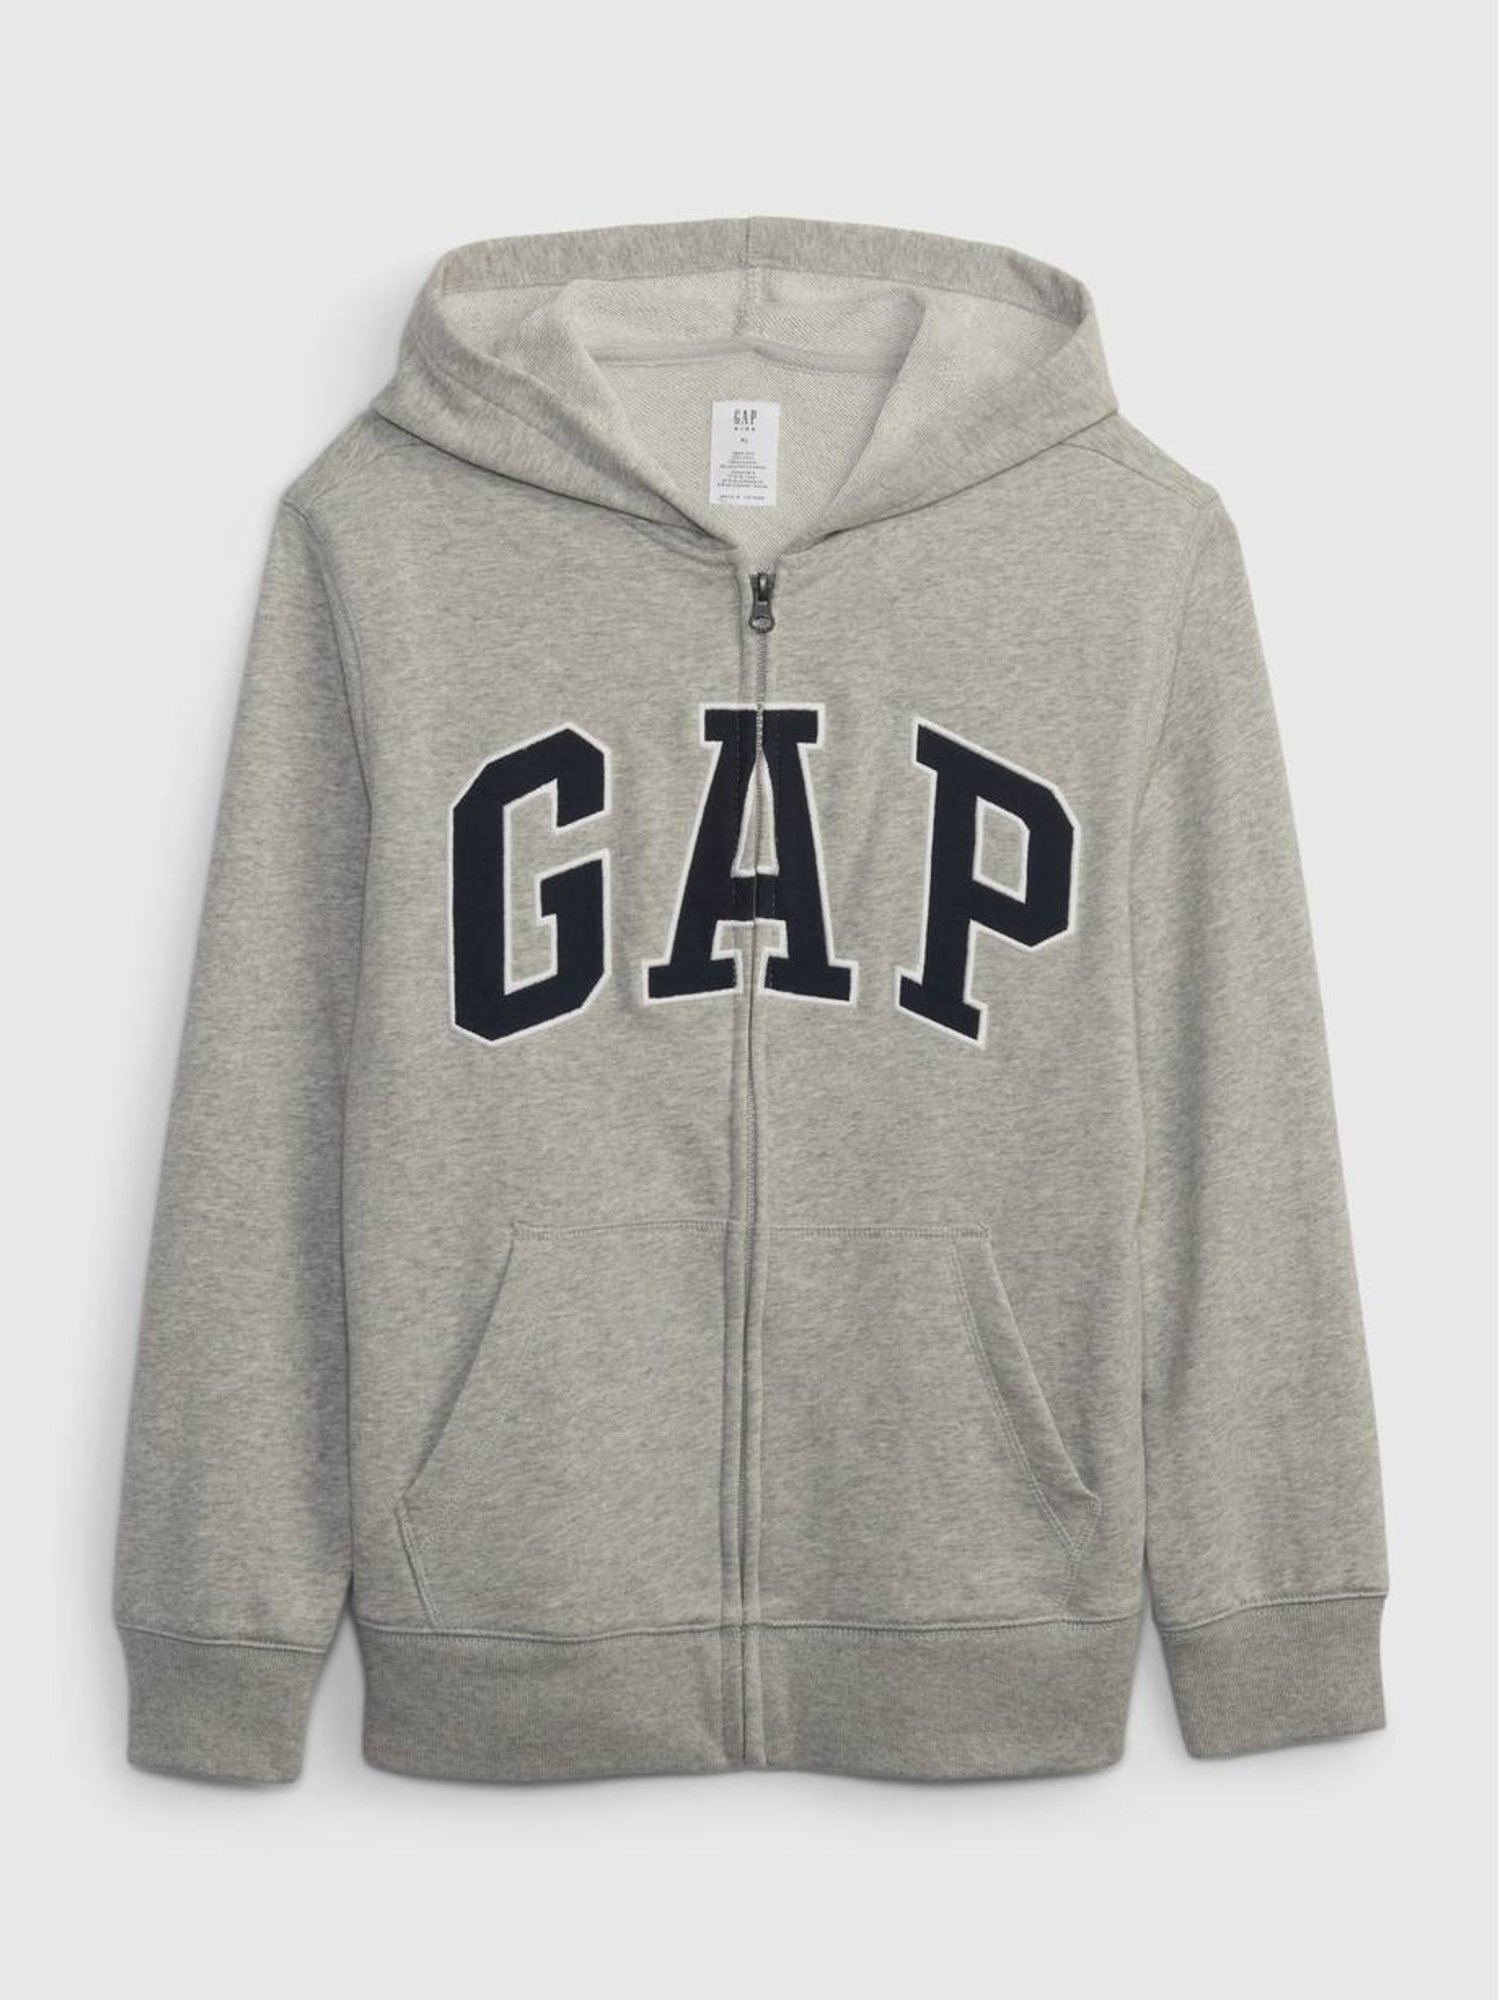 Gap Logo Havlu Kumaş Sweatshirt product image